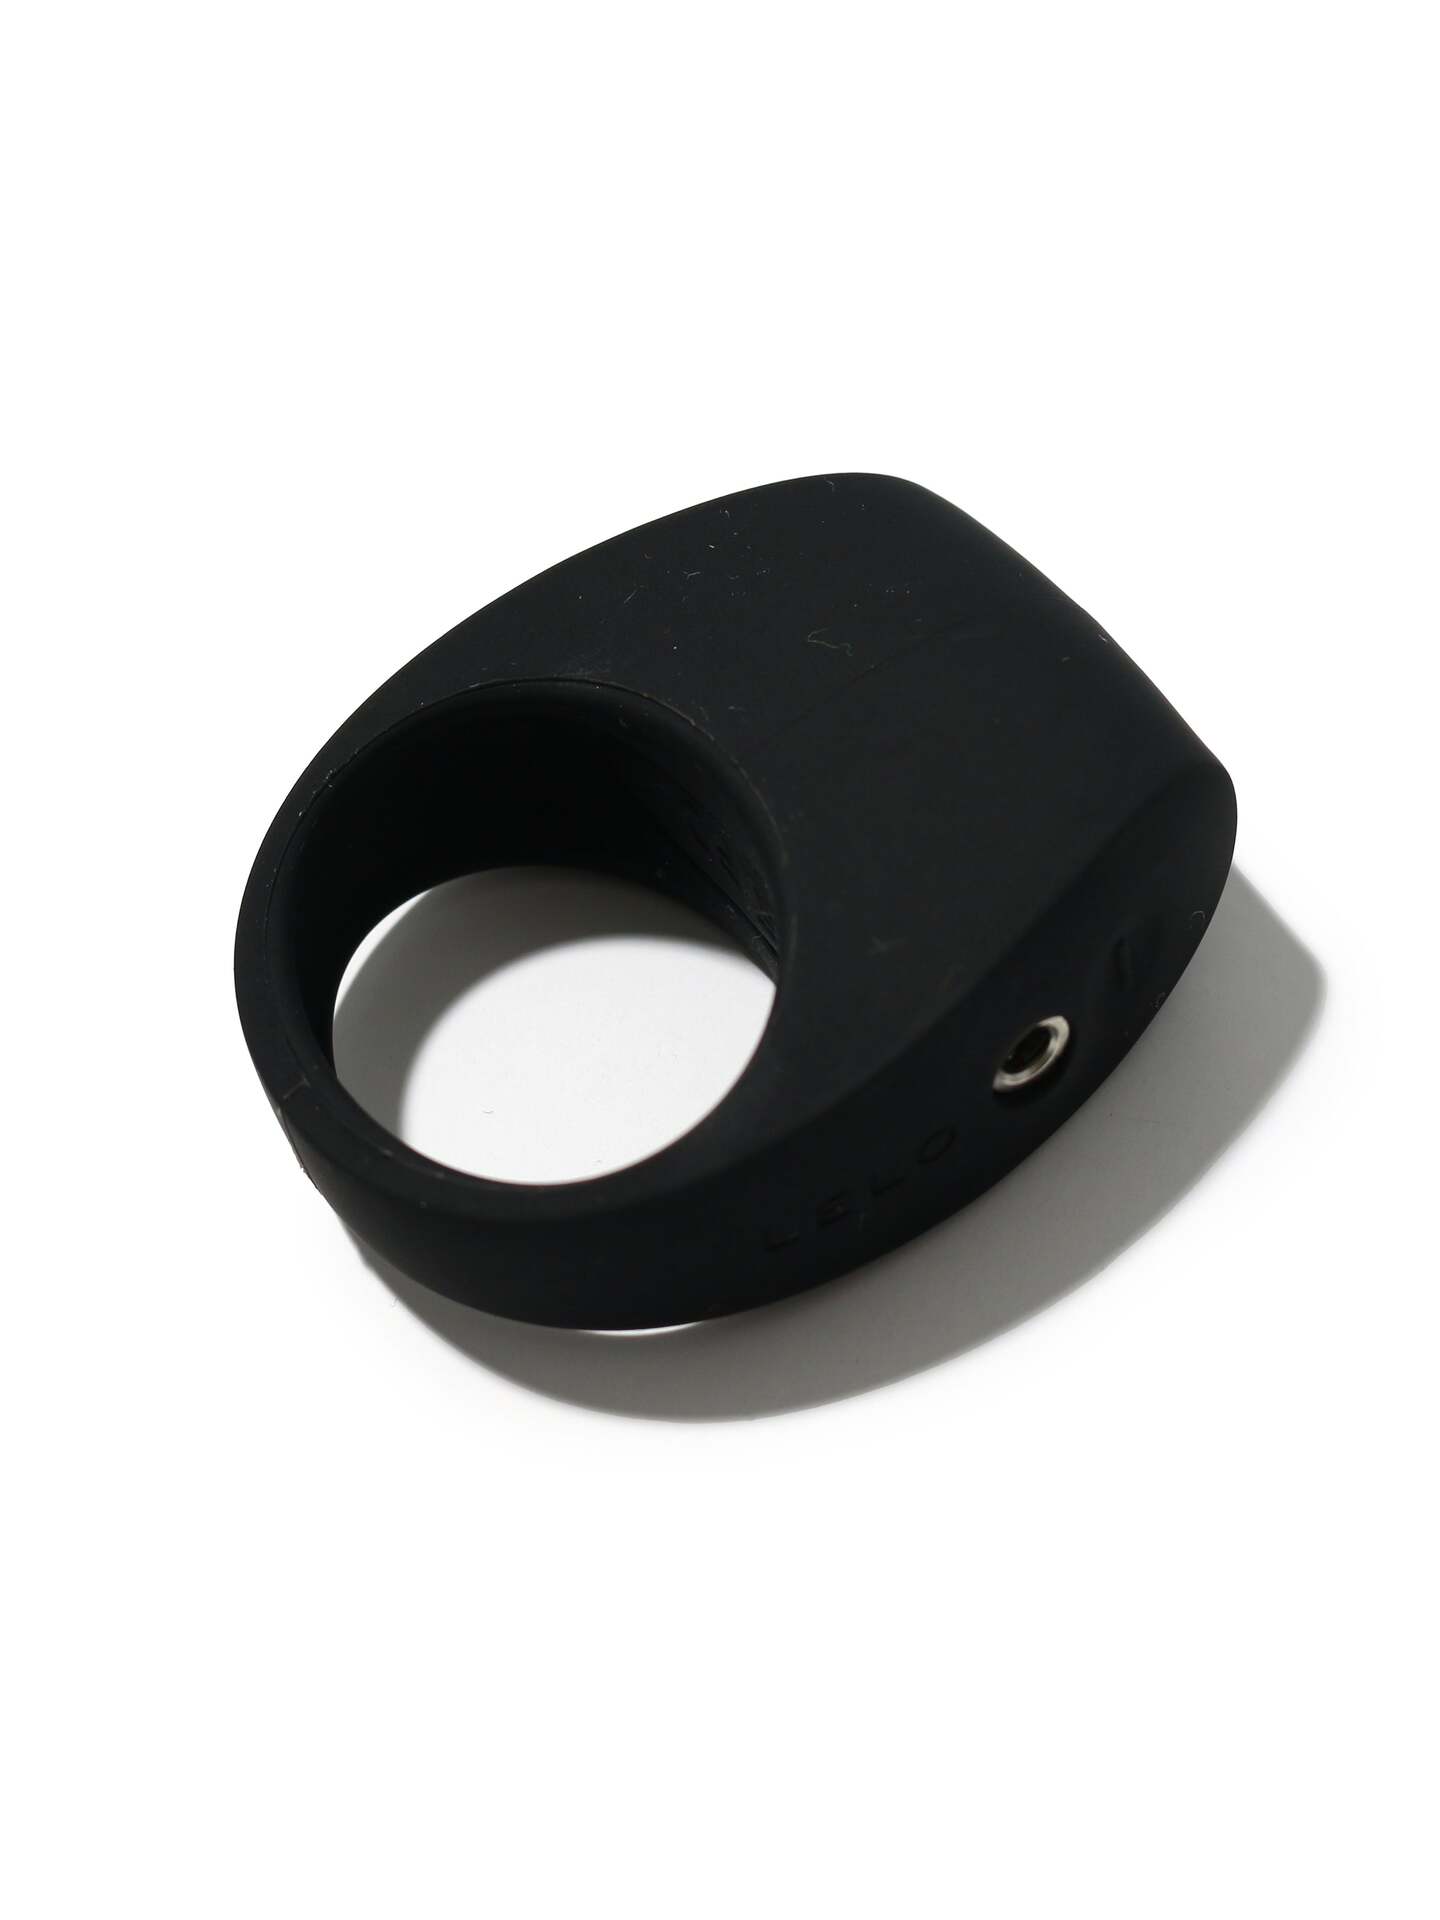 Hanky Panky Women's Lelo Tor 2 Vibrating Ring - Black, One Size